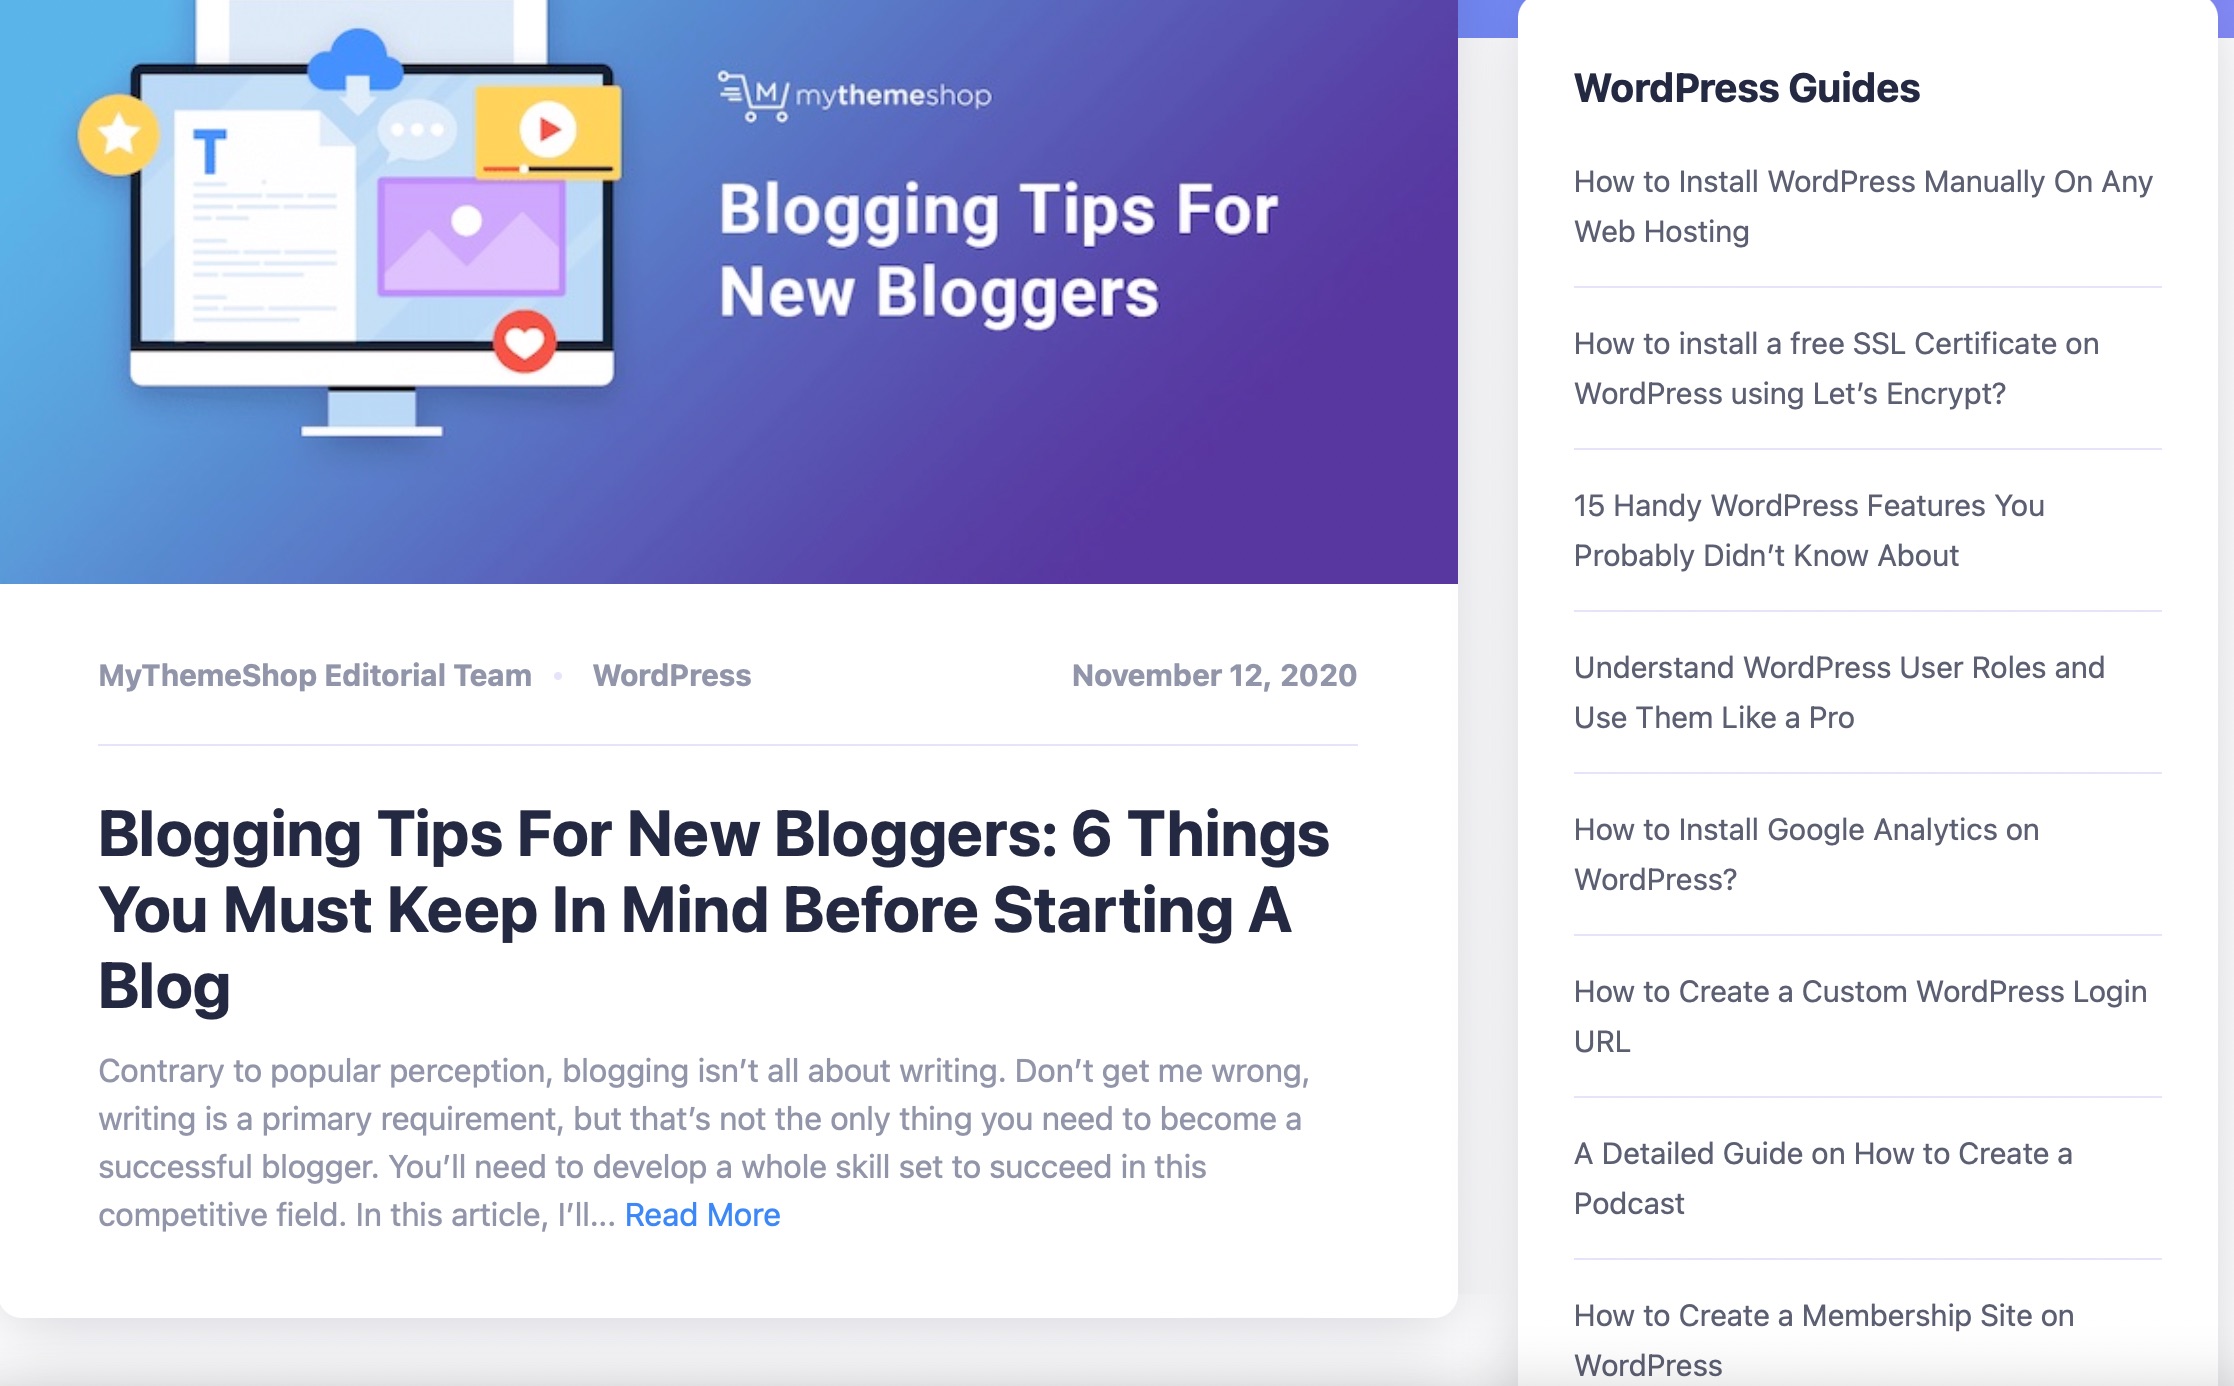 Featured posts in WordPress example